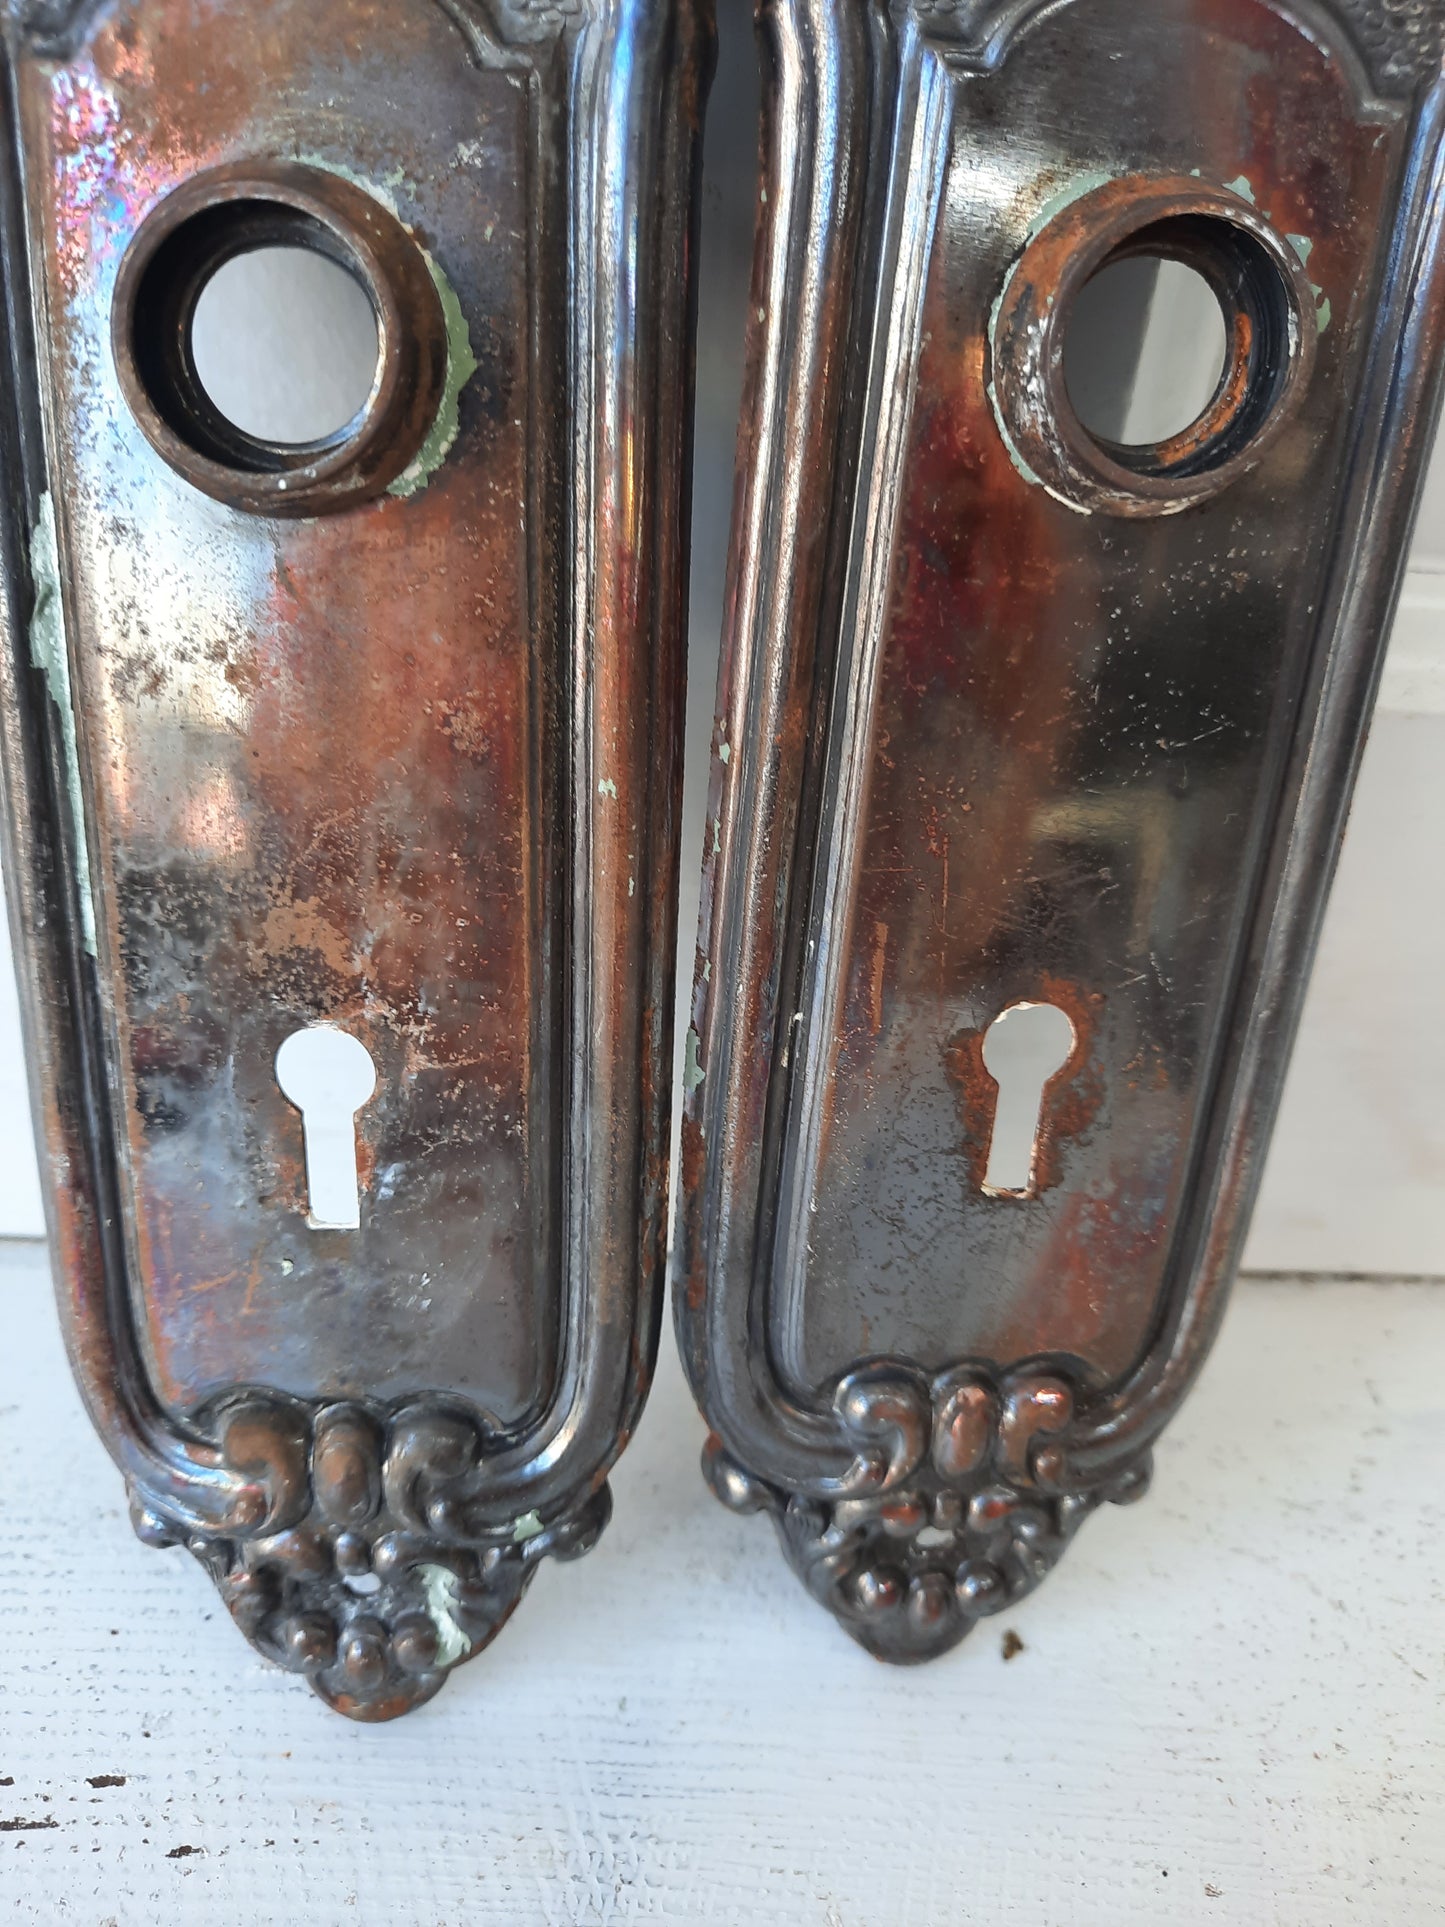 Set of Art Nouveau Plates and Doorknobs, Door Escutcheons with Knobs, Complete Door Hardware Set of Knobs and Backplates 022304